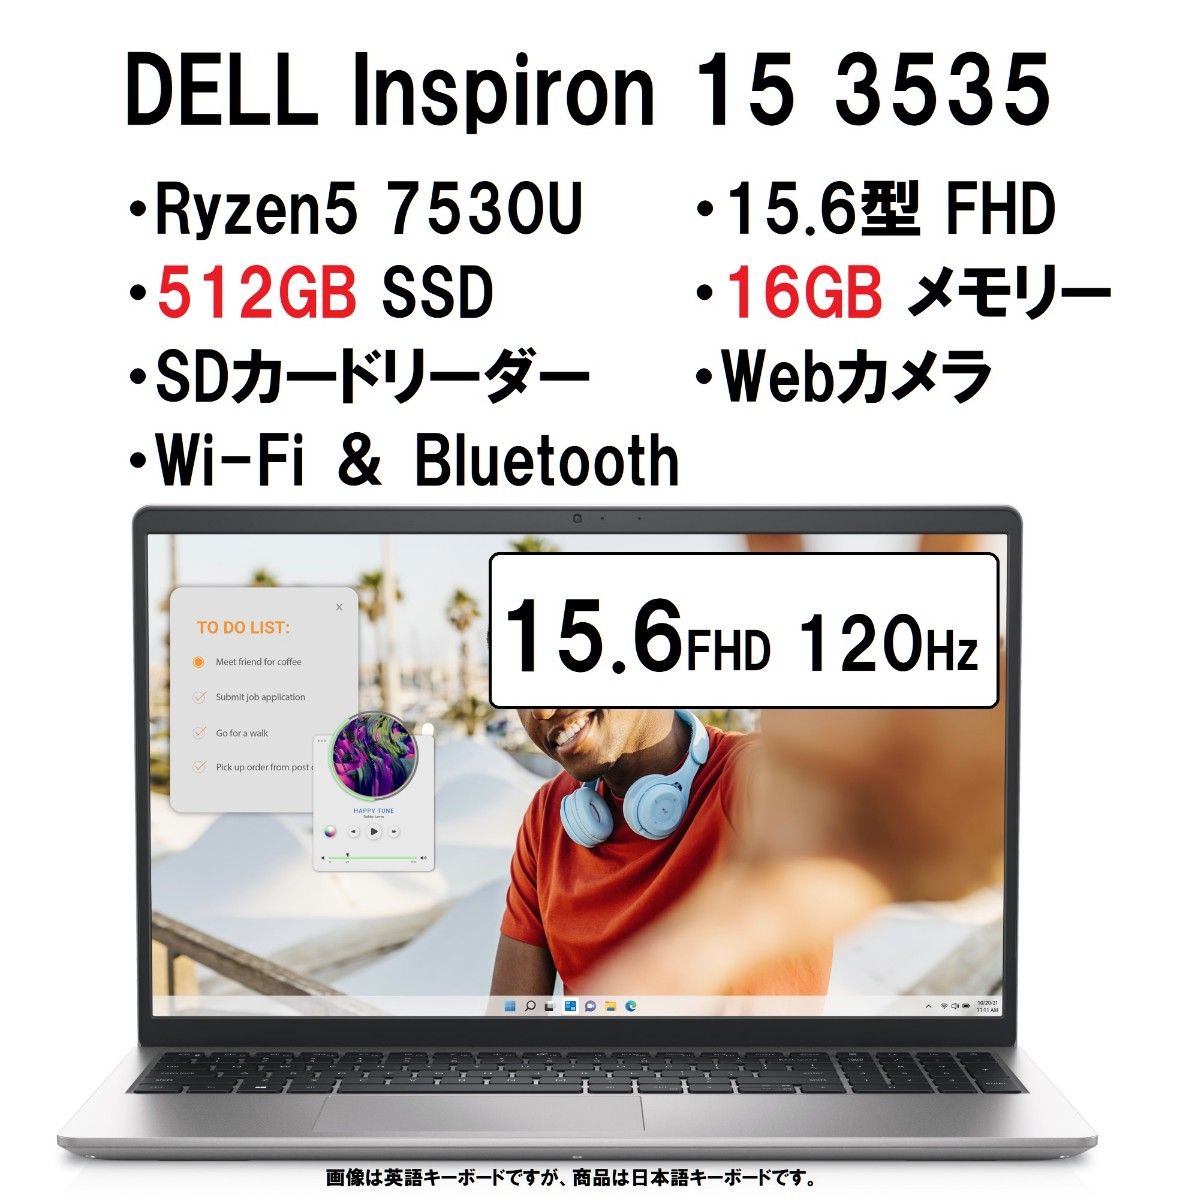 新品 超高性能 DELL Inspiron 15 AMD Ryzen5 7530U/16G/512G/15.6型 FHD/WiFi